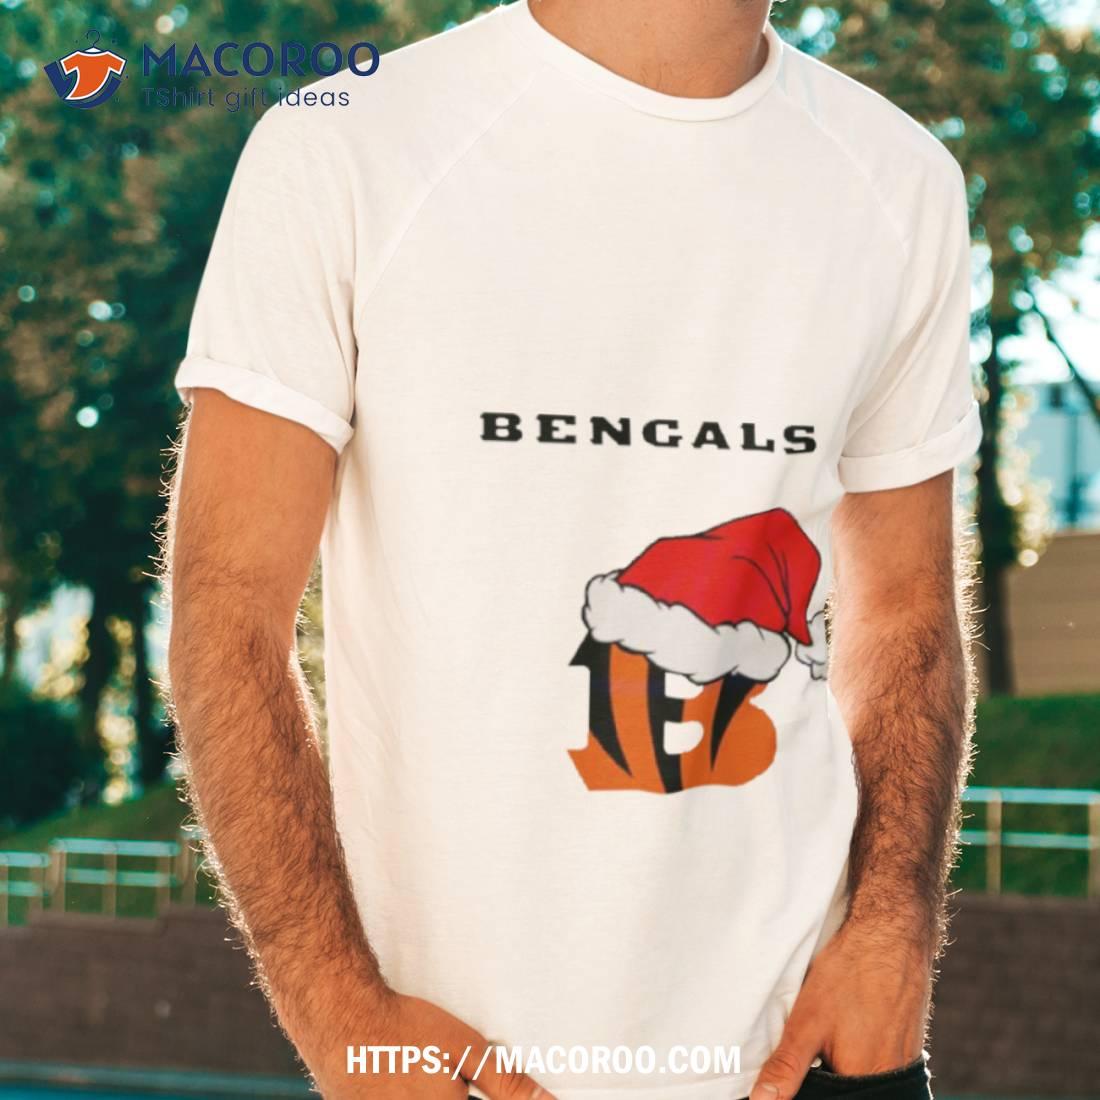 unique bengals shirts